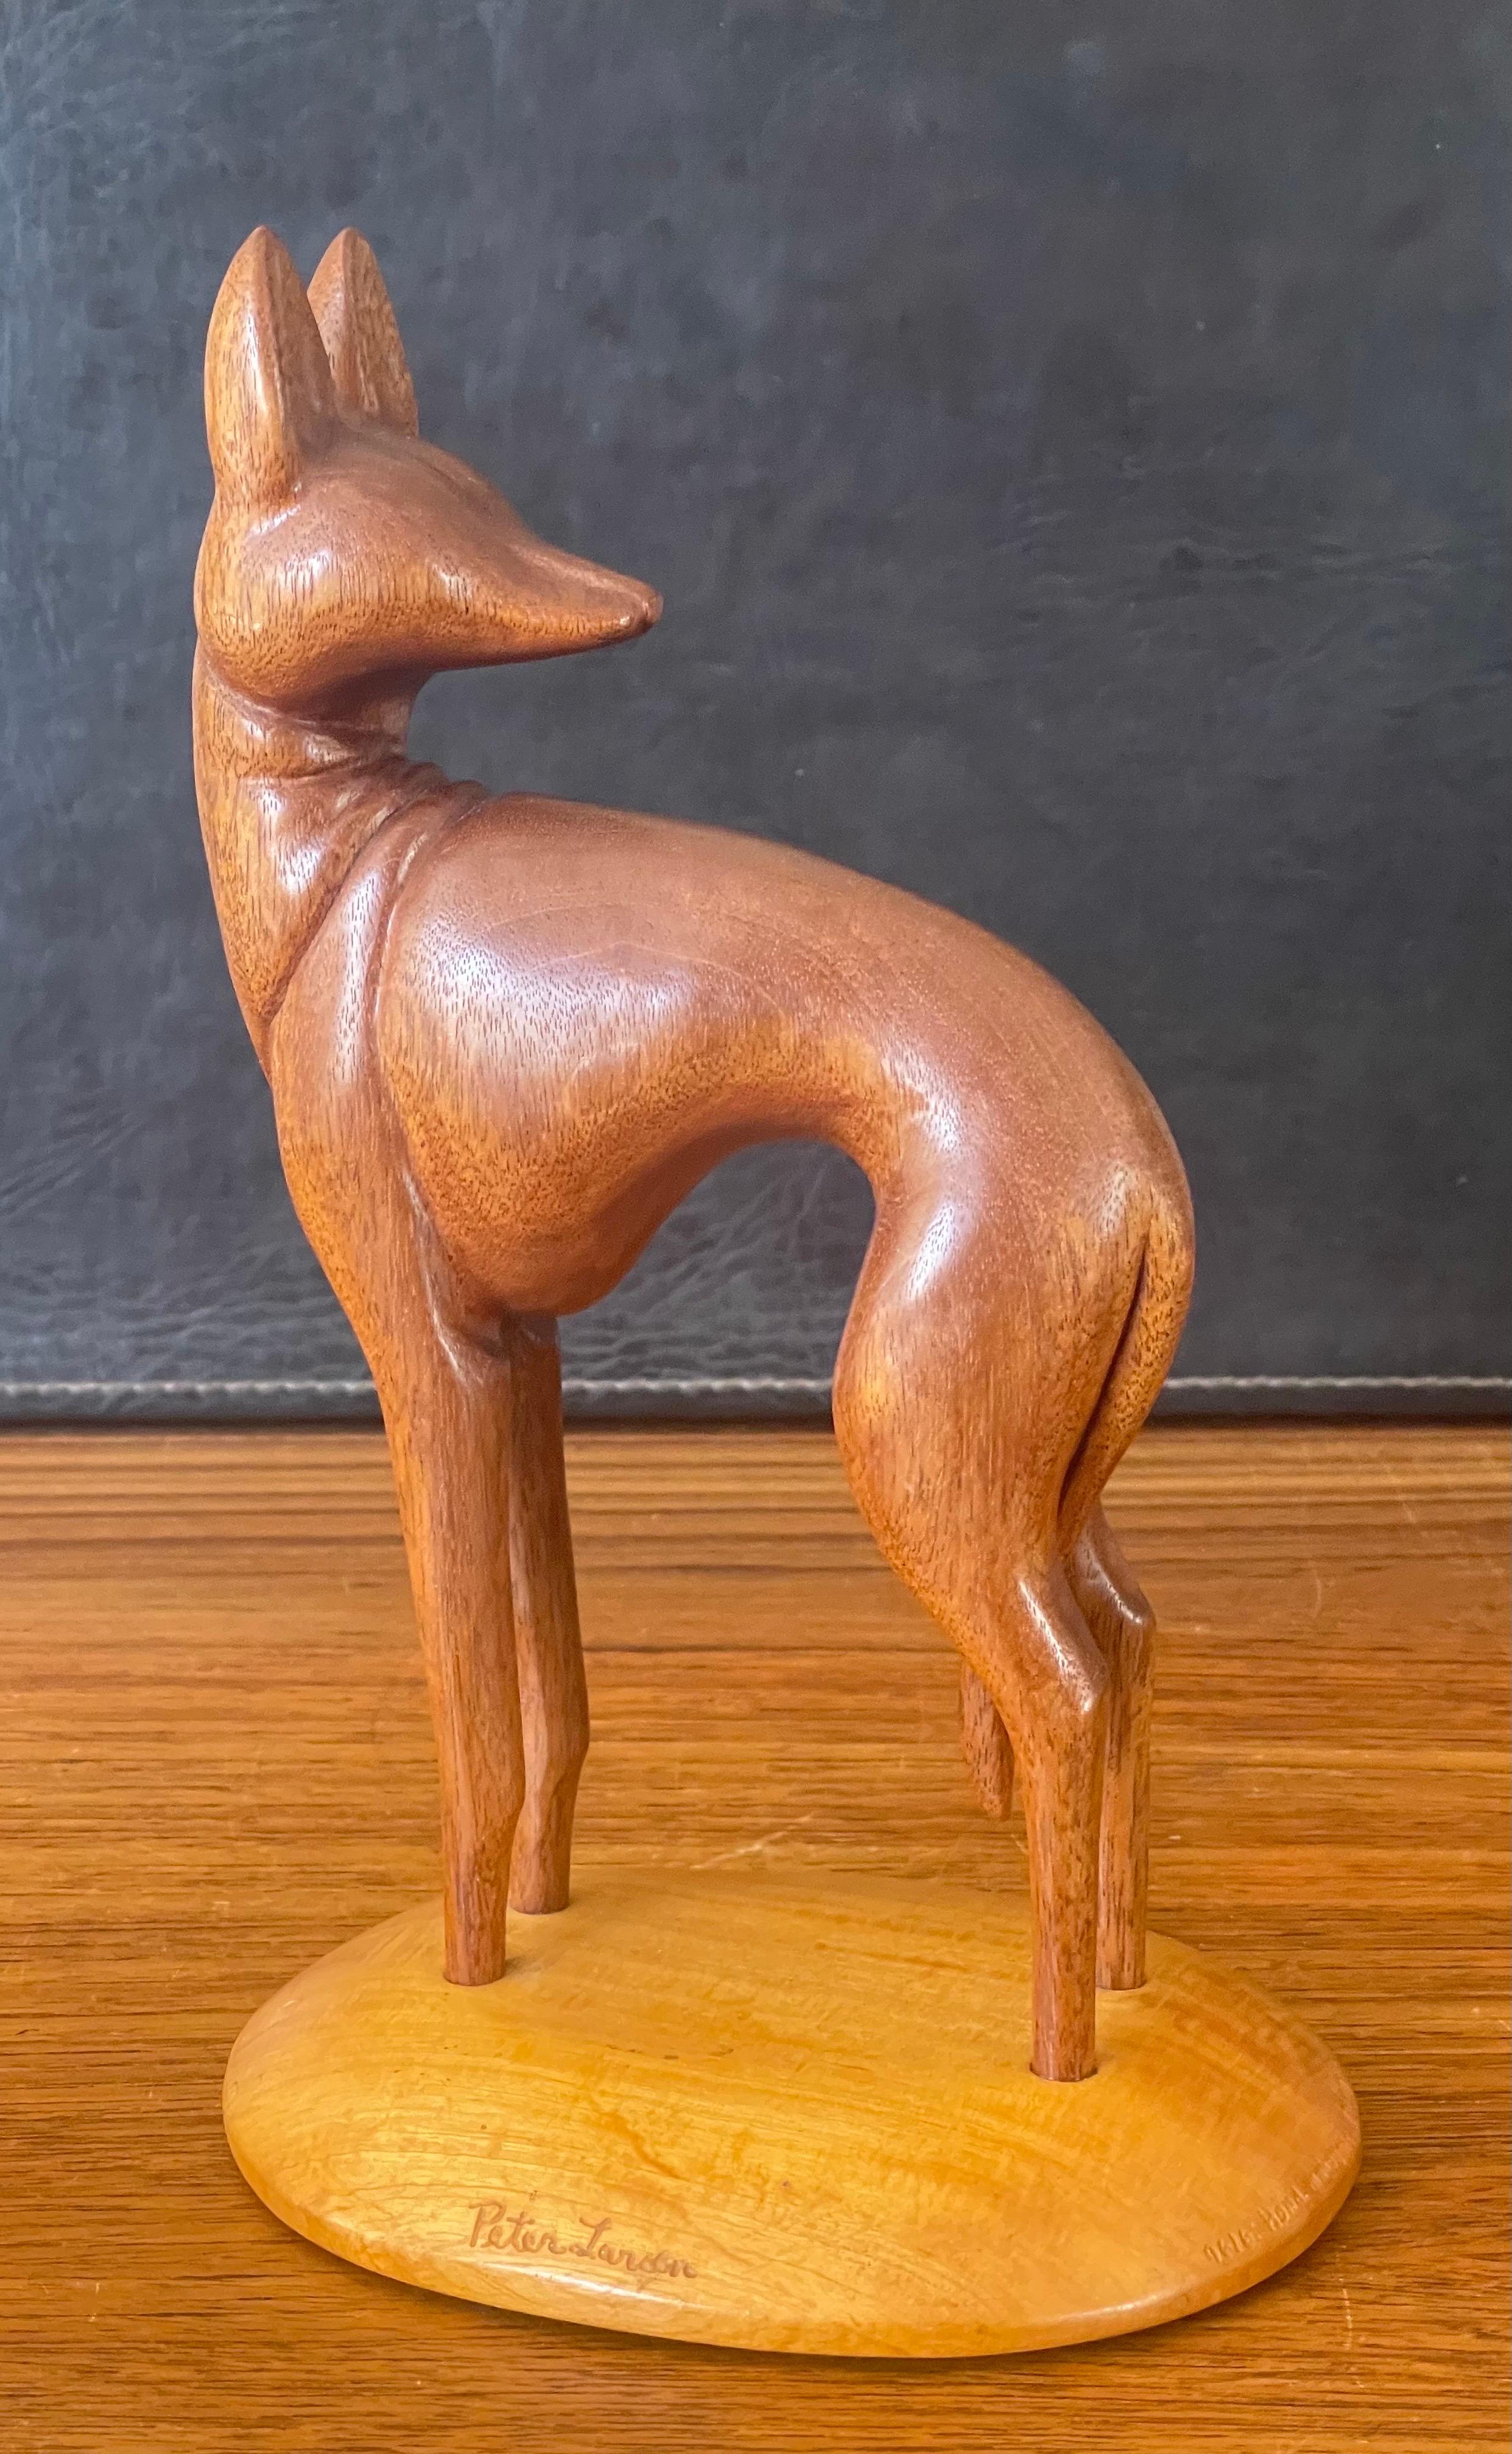 Hand Carved Teak Greyhound Sculpture on Maple Base by Peter Larsen For Sale 10